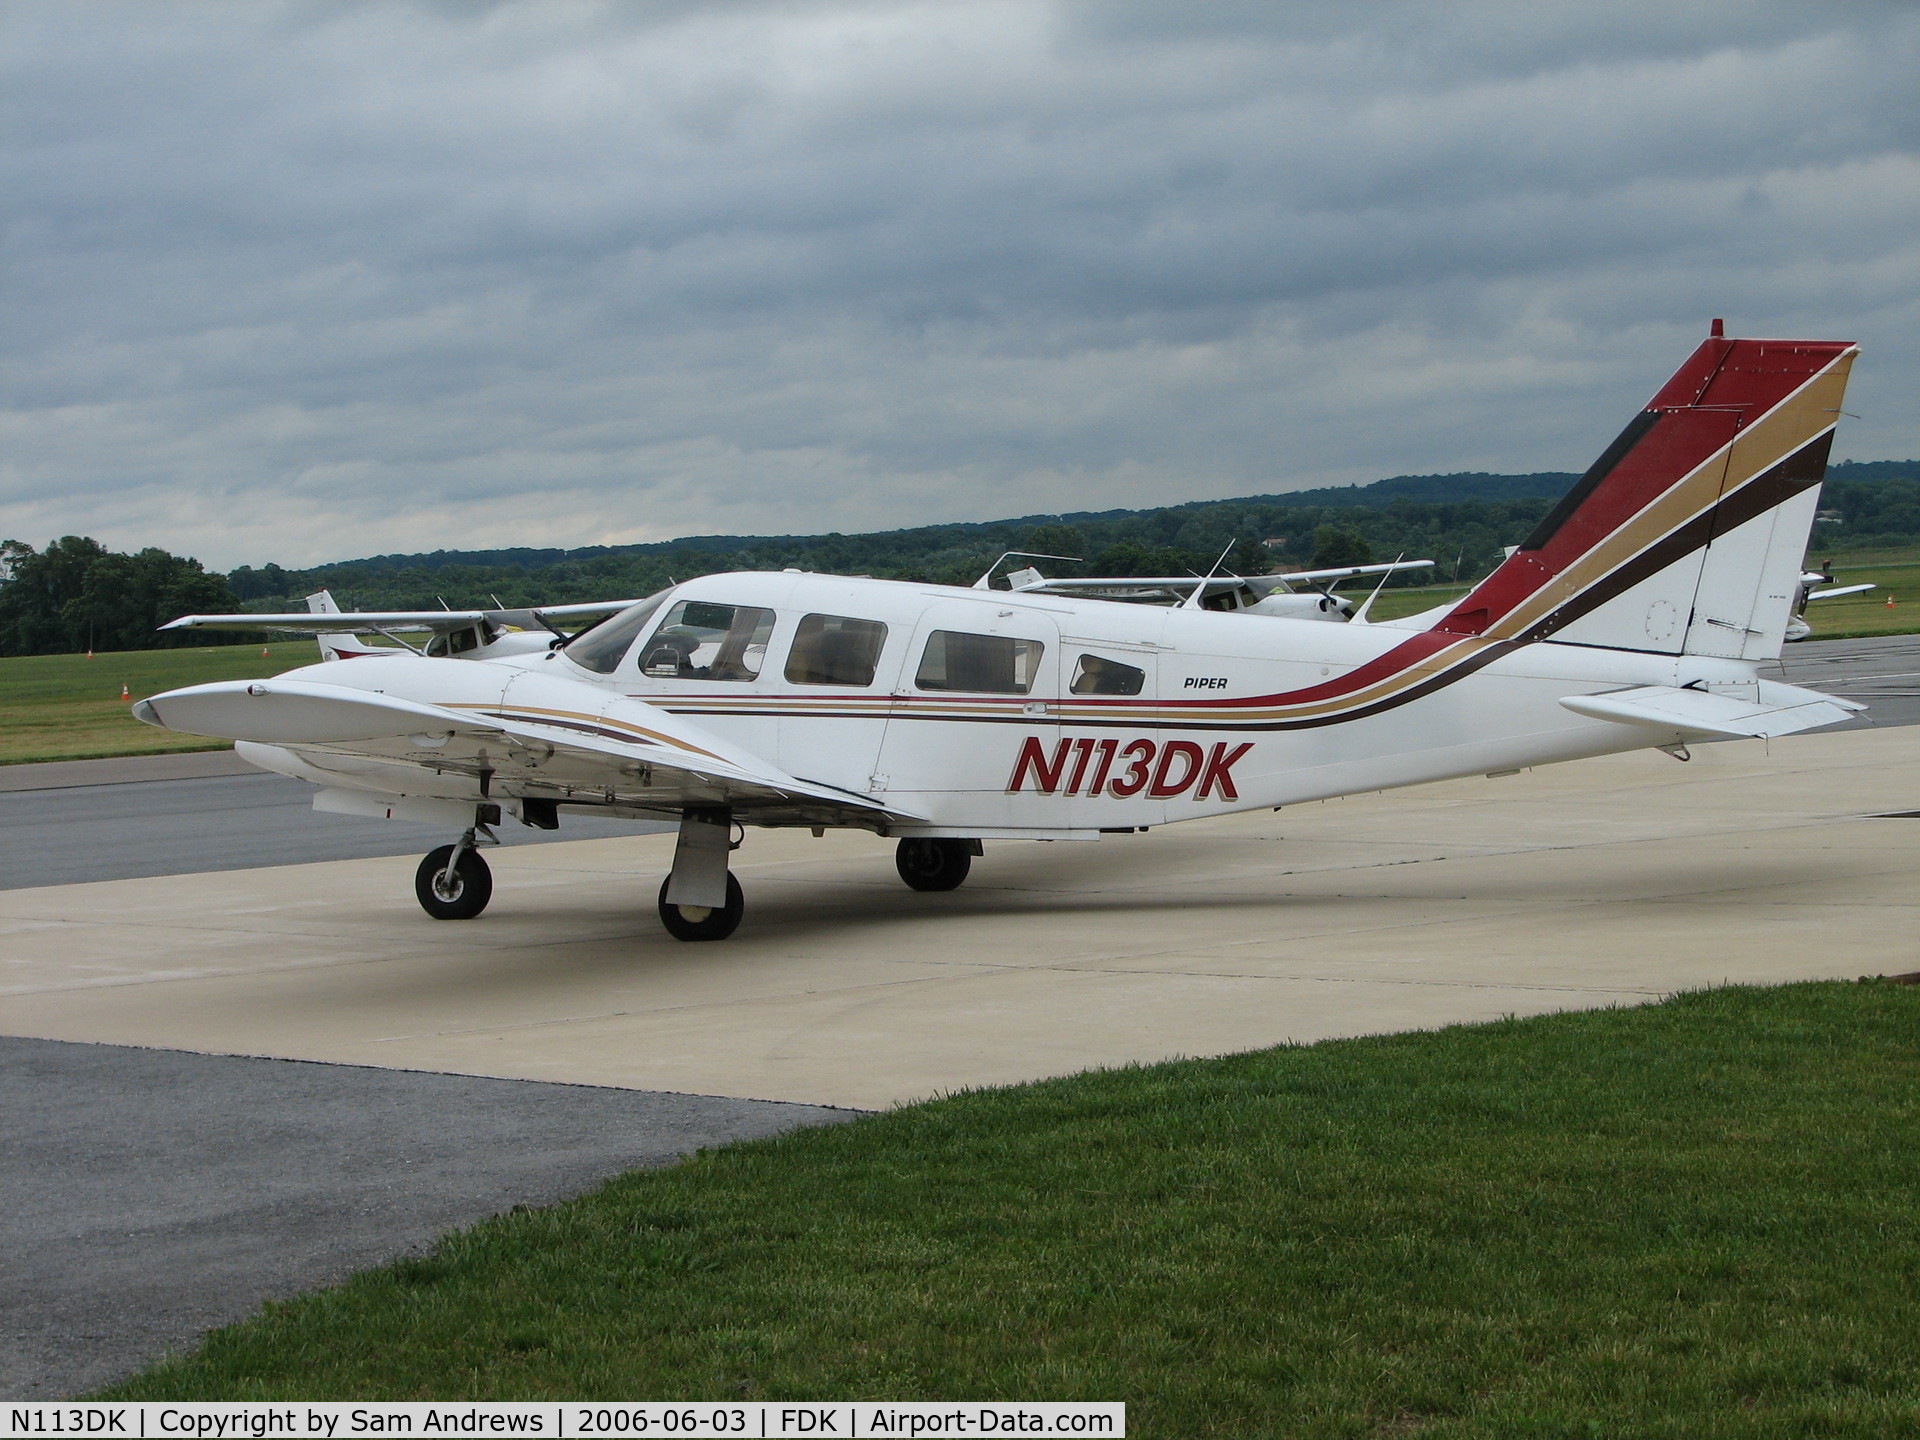 N113DK, 1978 Piper PA-34-200T C/N 34-7870151, This Seneca had a choice parking spot at AOPA Fly-in 2006